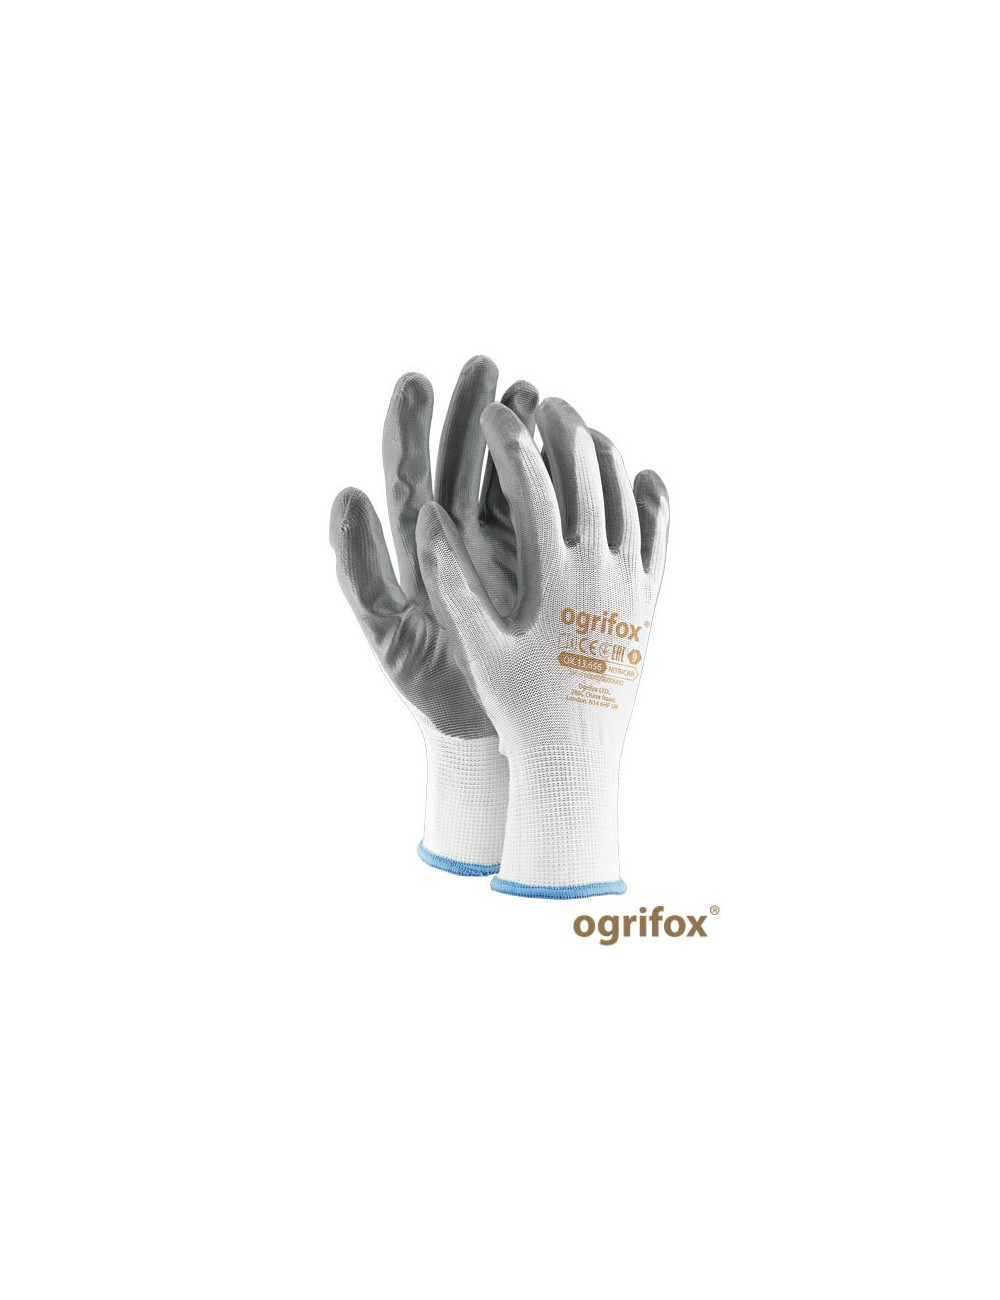 Gloves ox.13.656 nitricar ox-nitricar ws white-gray Ogrifox